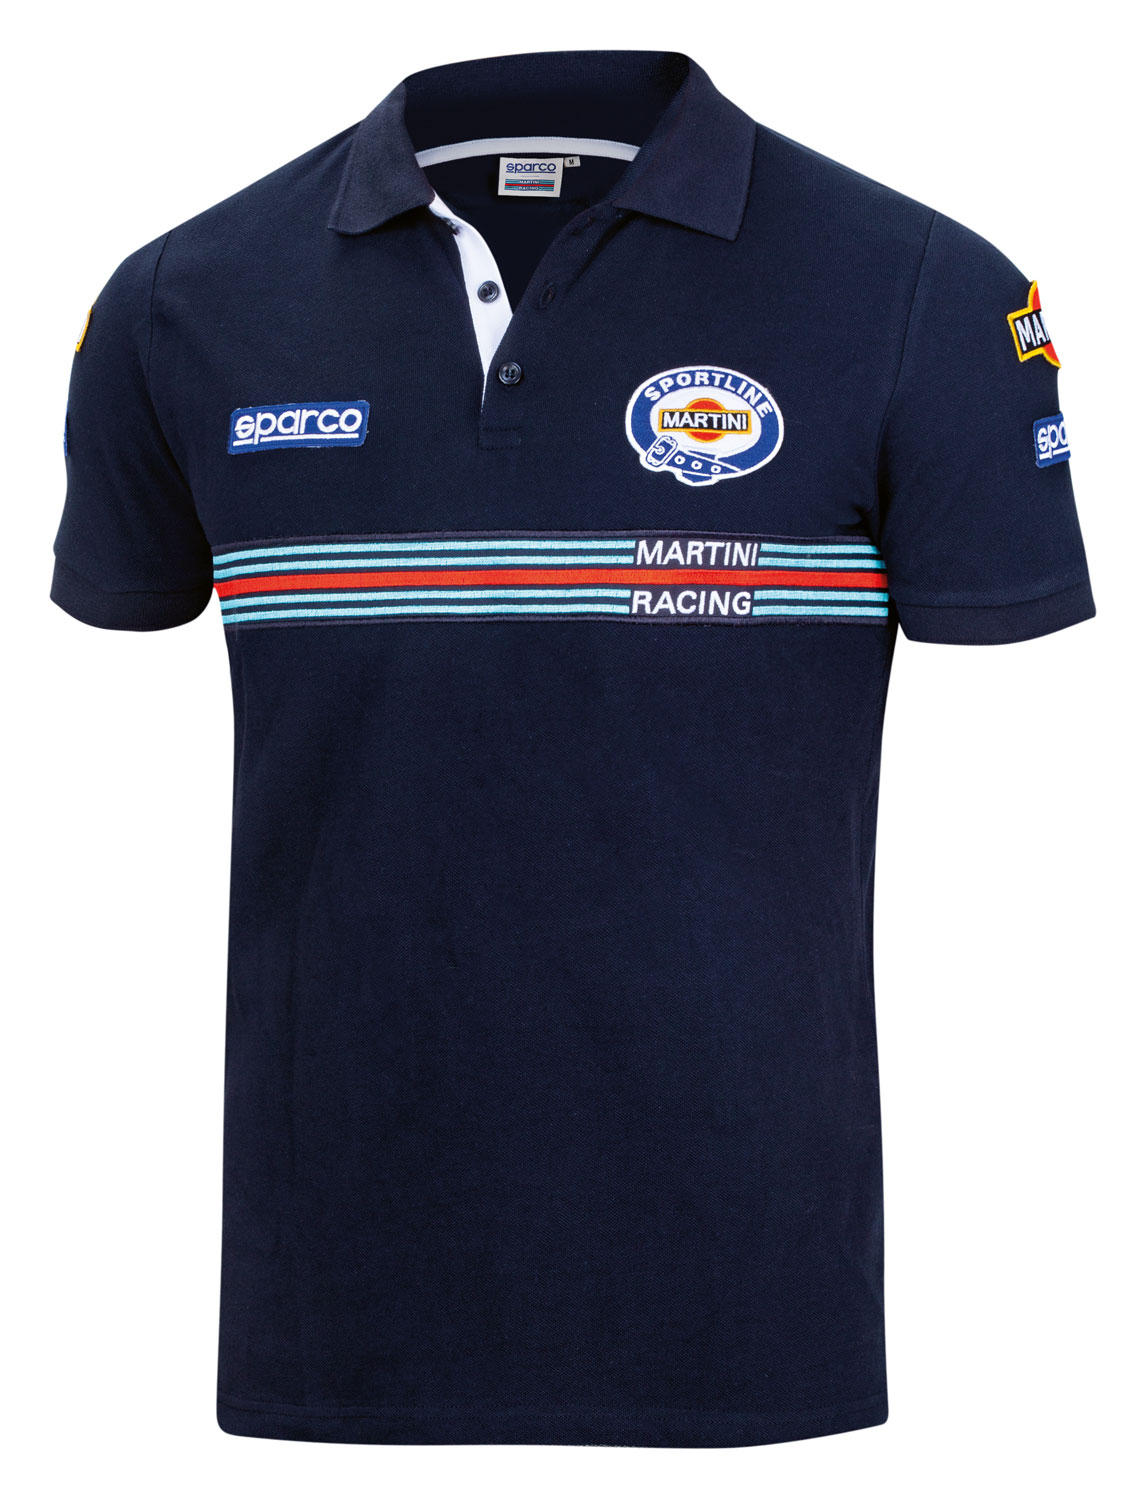 Sparco Poloshirt Martini Racing, dunkelblau